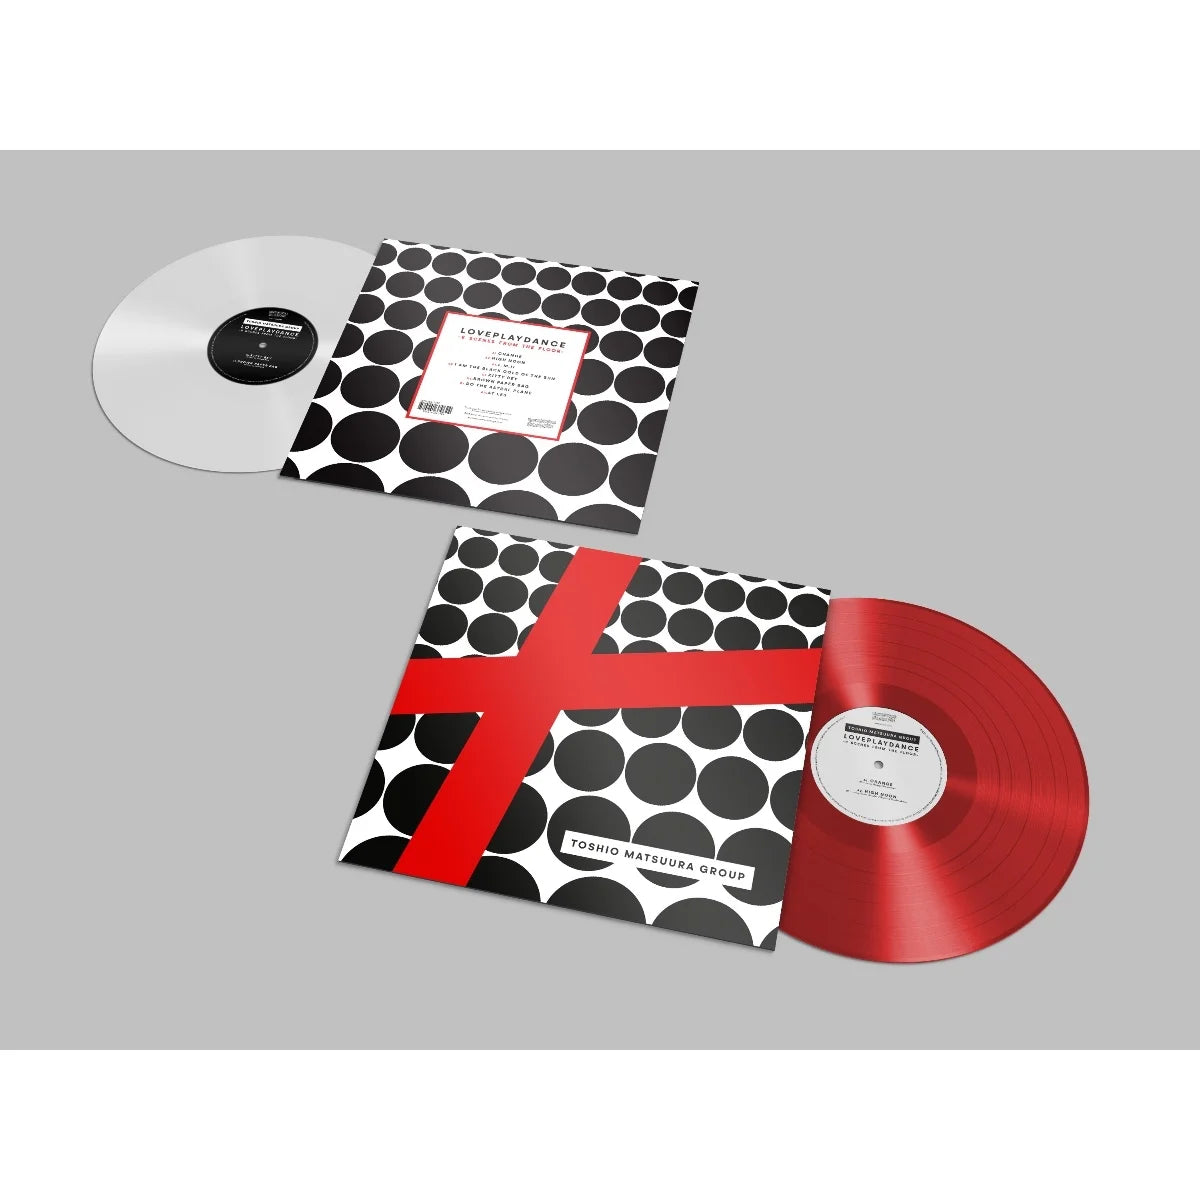 Toshio Matsuura Group  - Loveplaydance (Red & White Vinyl Reissue)